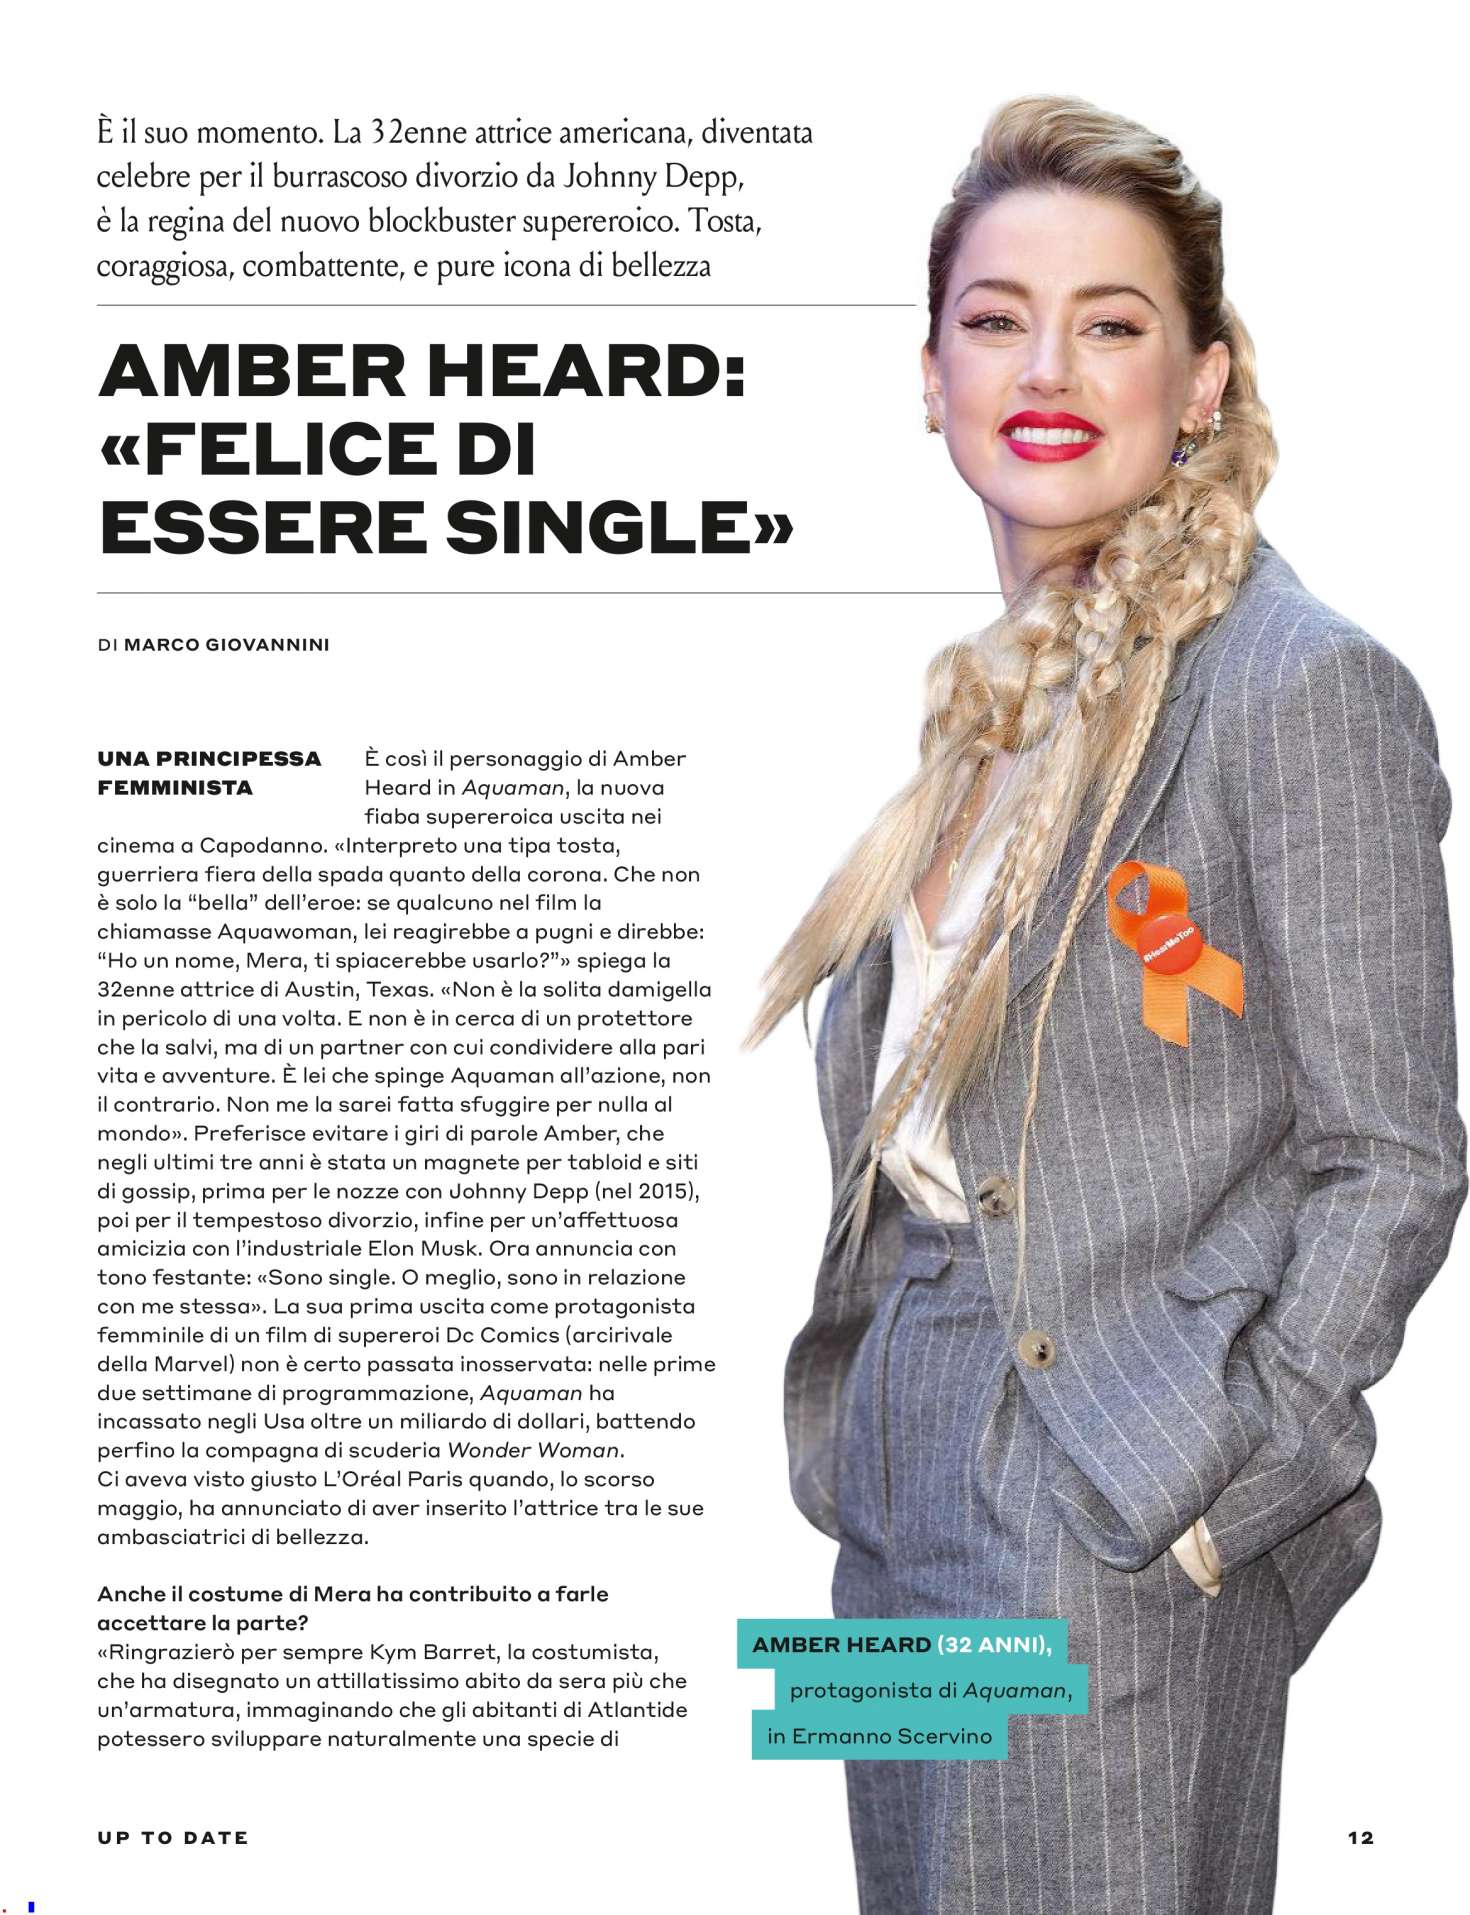 Amber Heard â€“ Tu Style Magazine (January 2019)